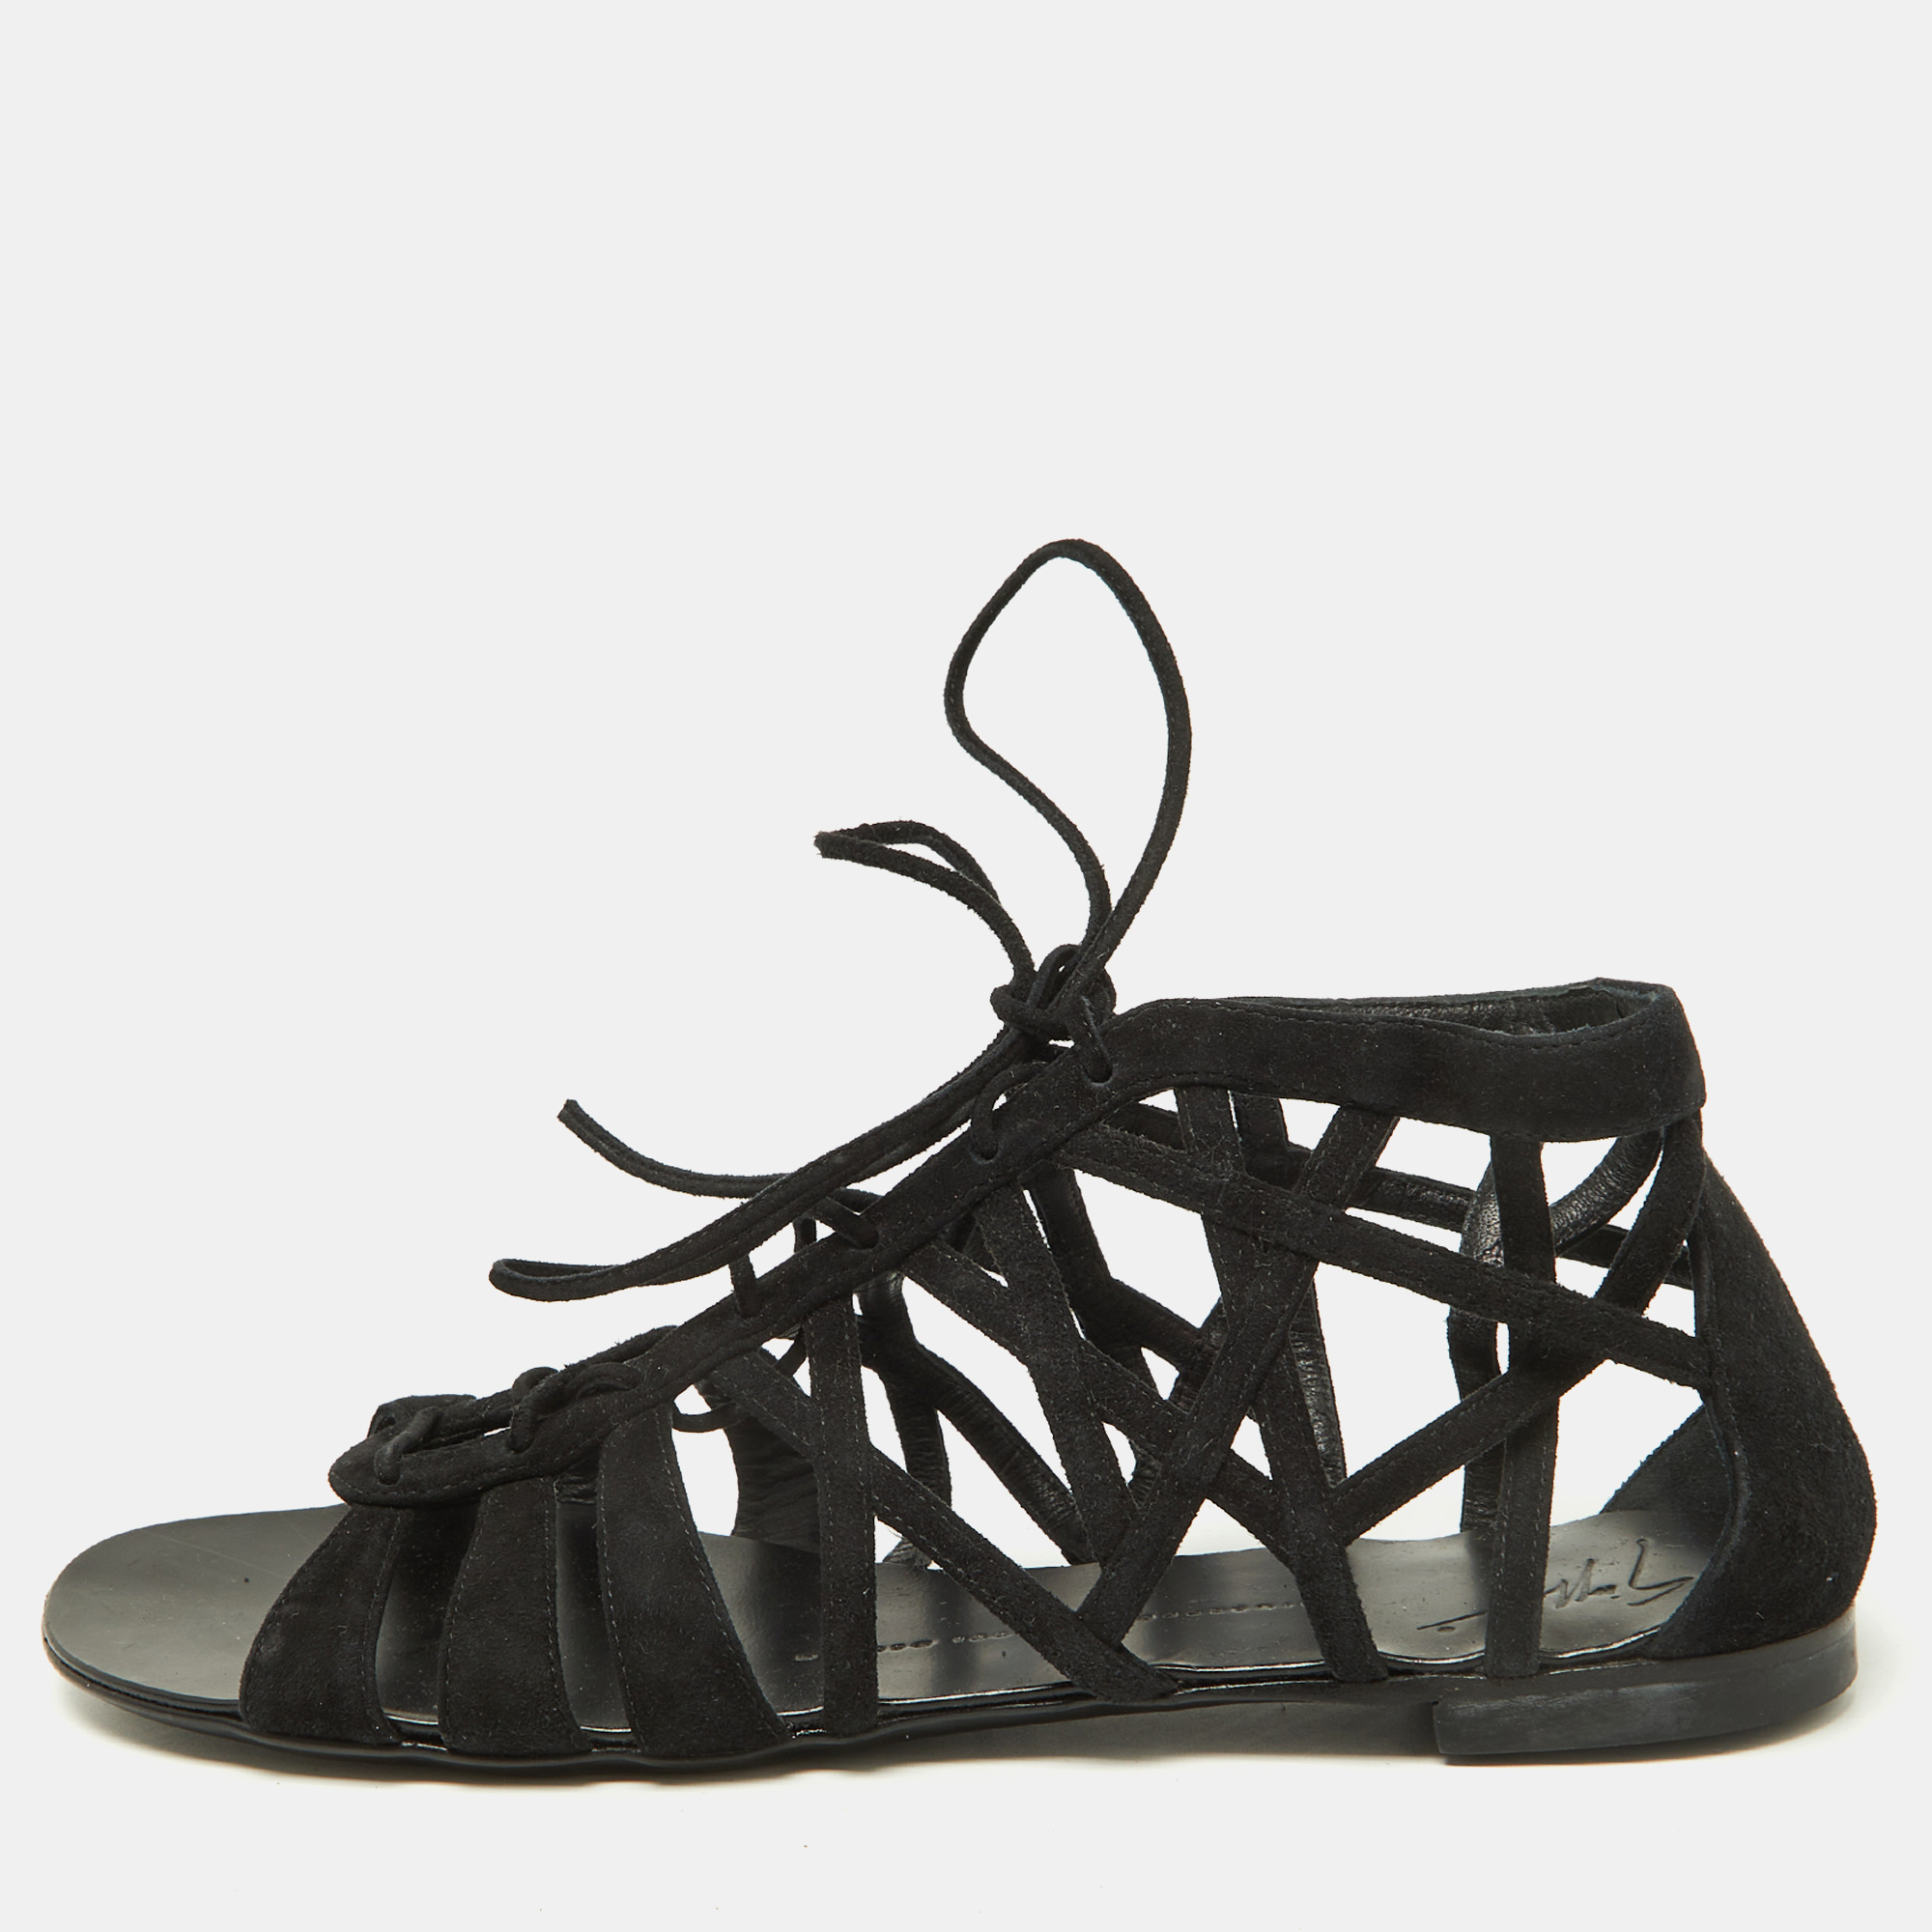 Giuseppe zanotti black suede strappy lace up flat sandals size 38